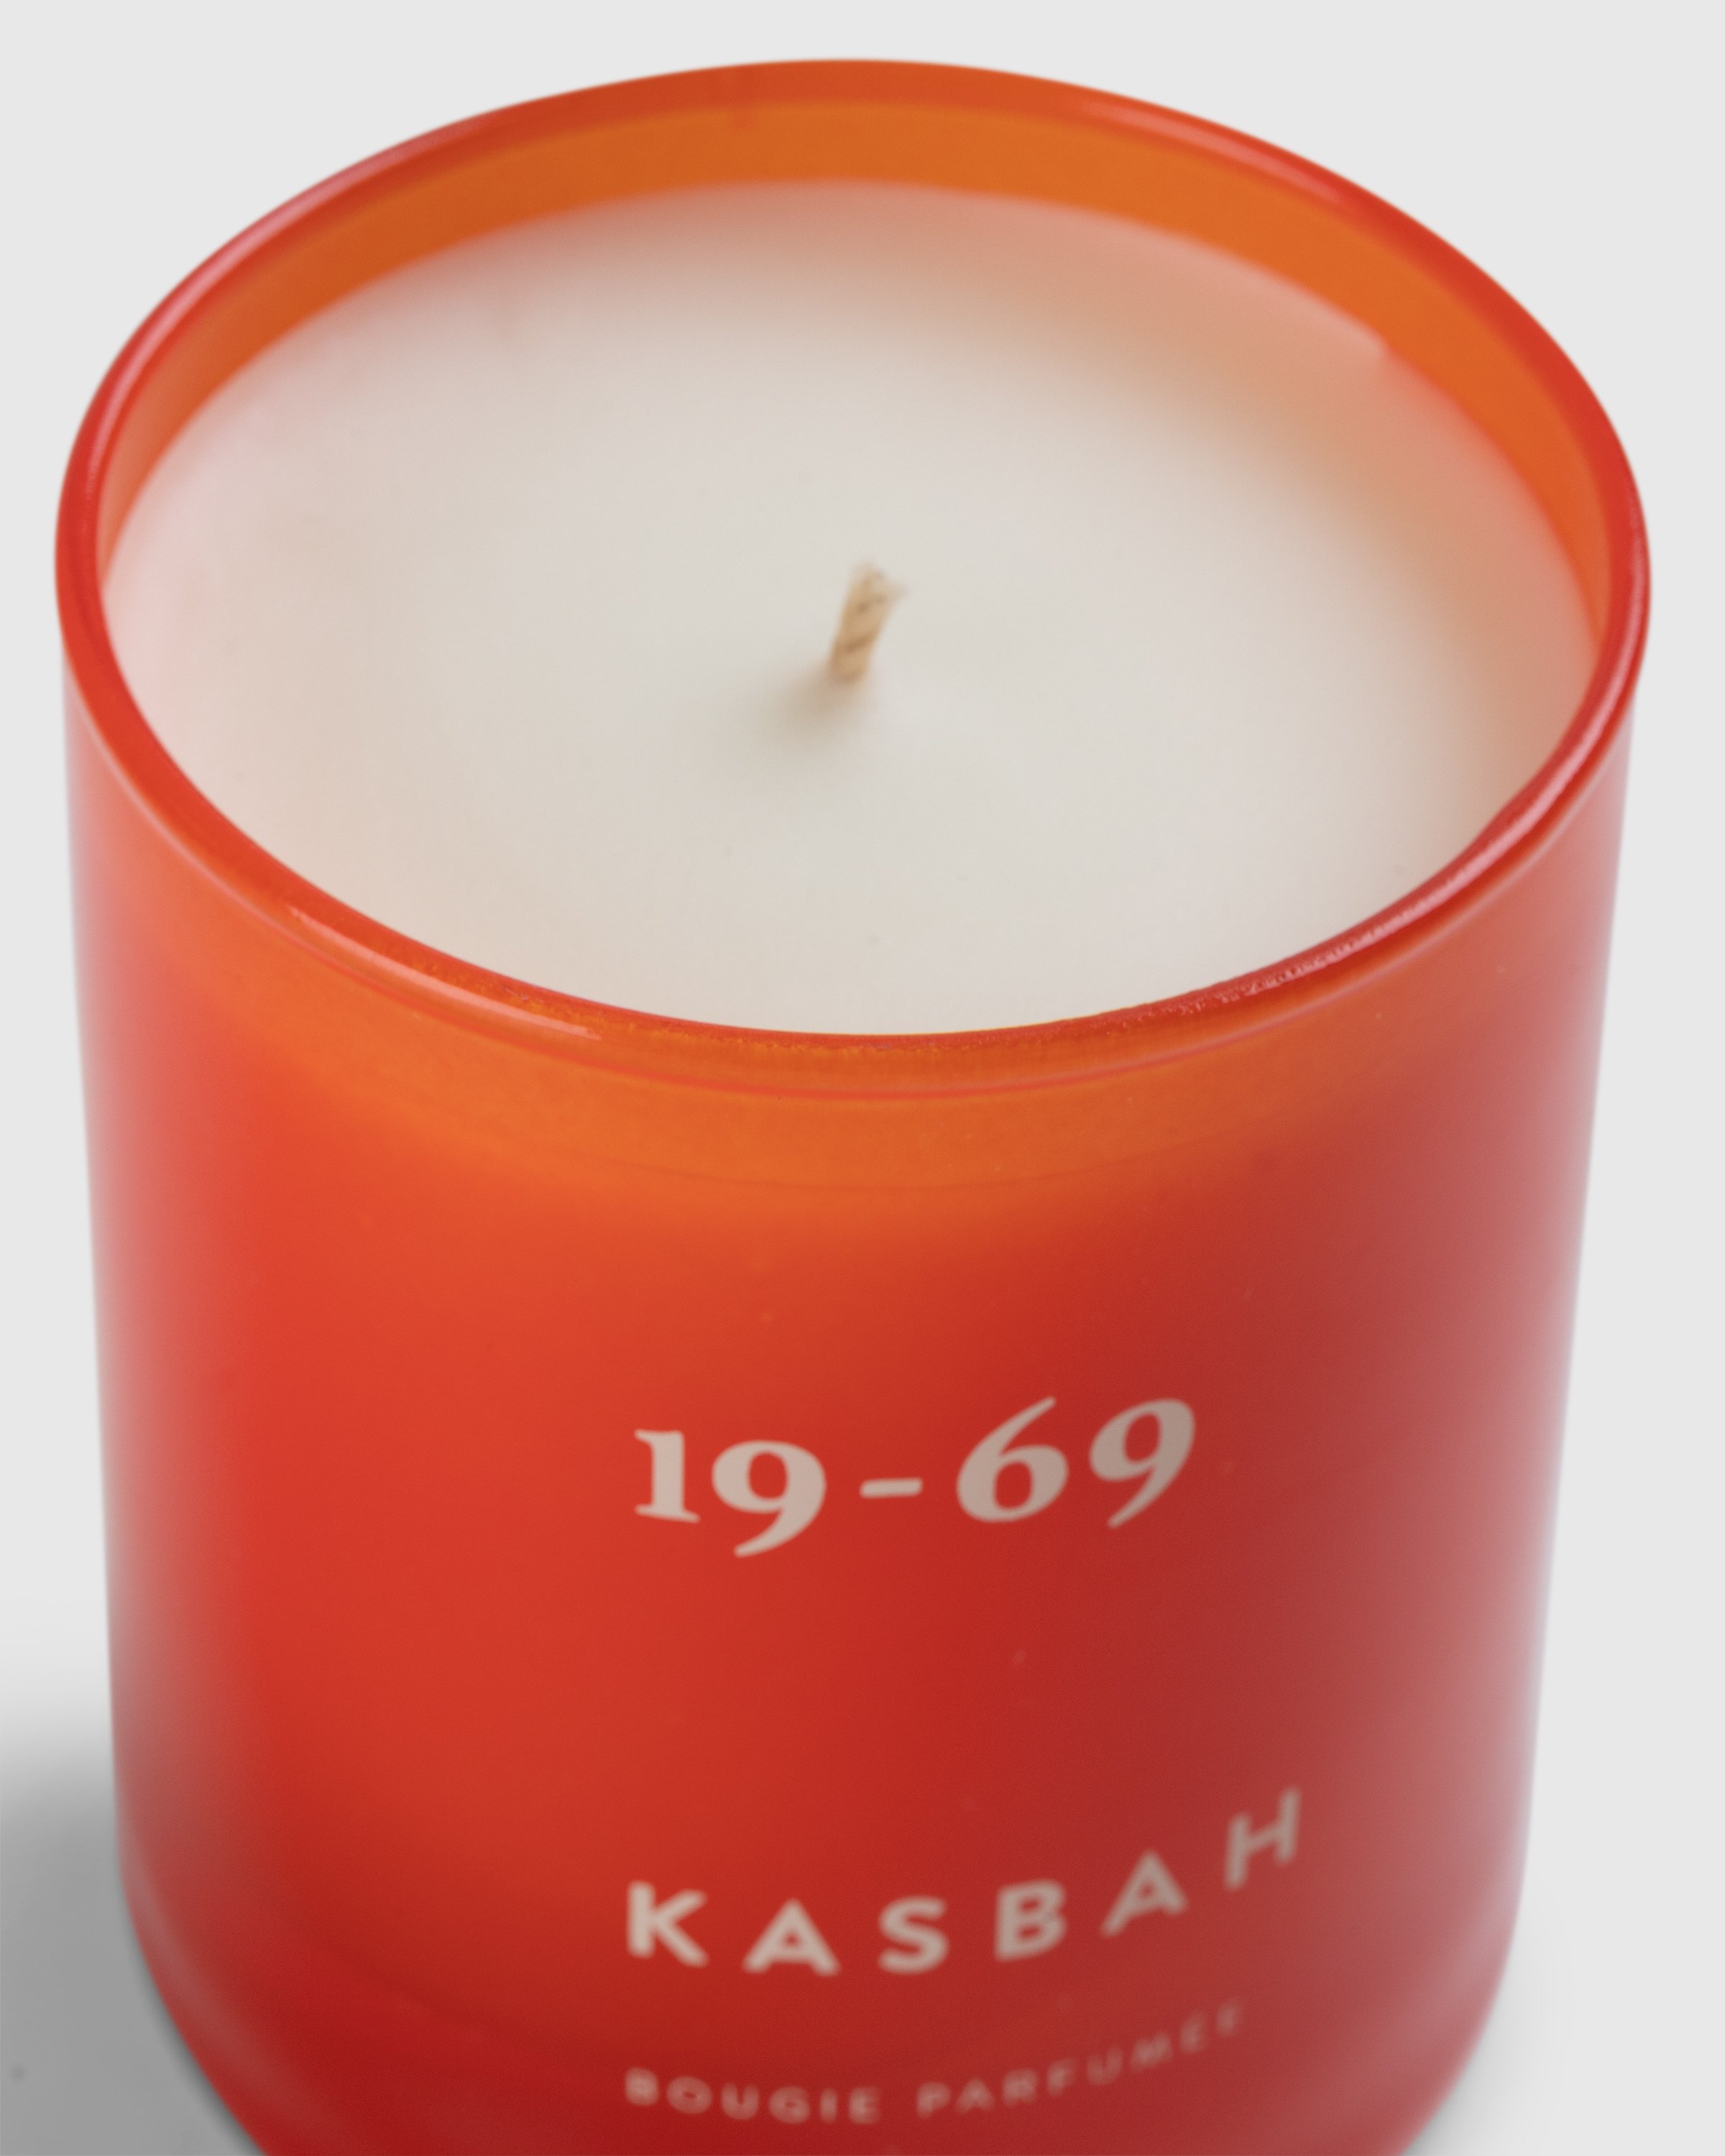 19-69 - Kasbah BP Candle - Lifestyle - Orange - Image 3